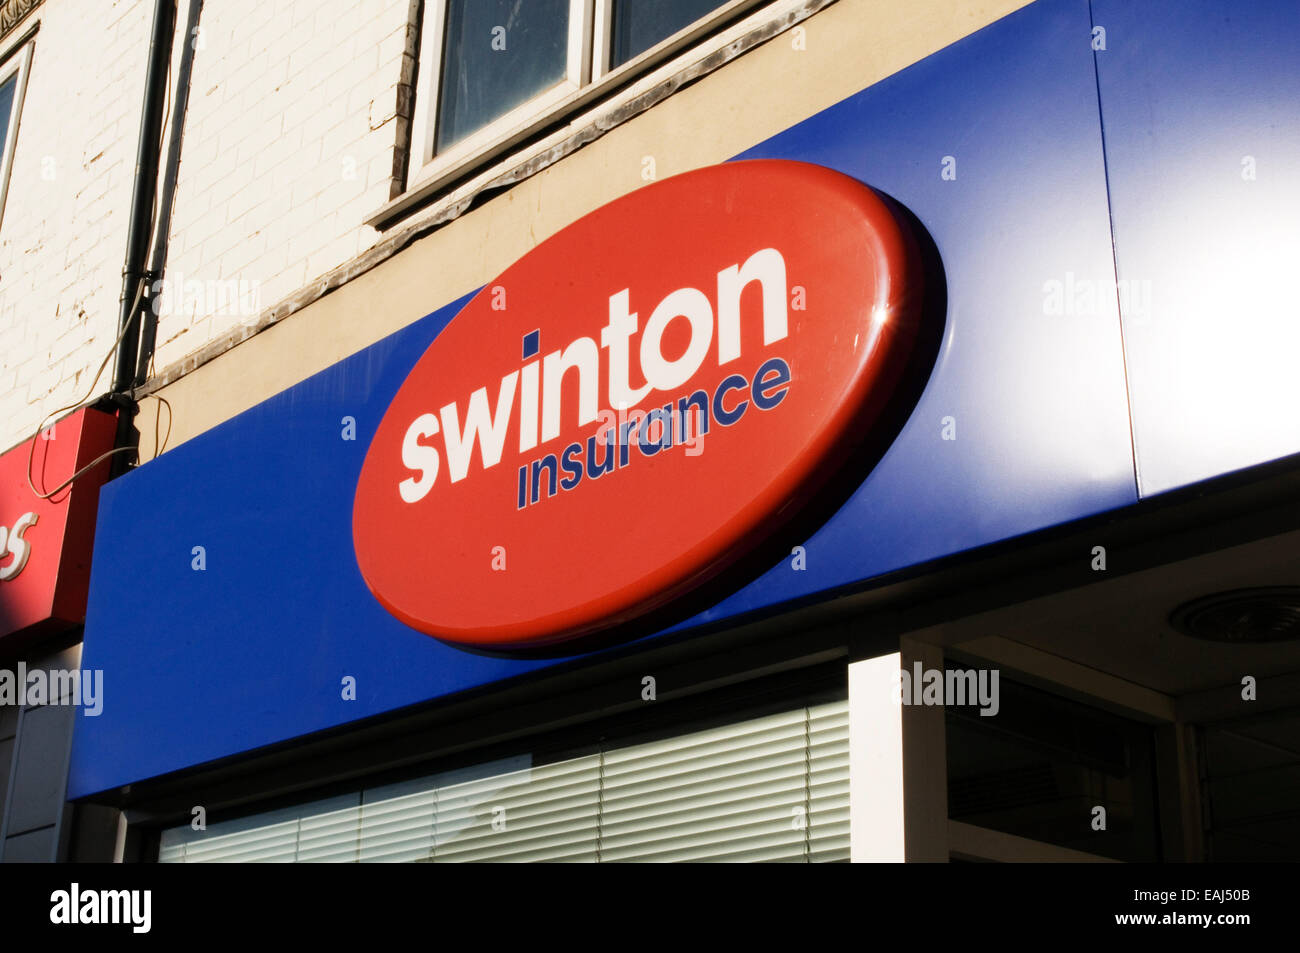 swinton insurance high street shop shops insurers broker brokers Stock Photo